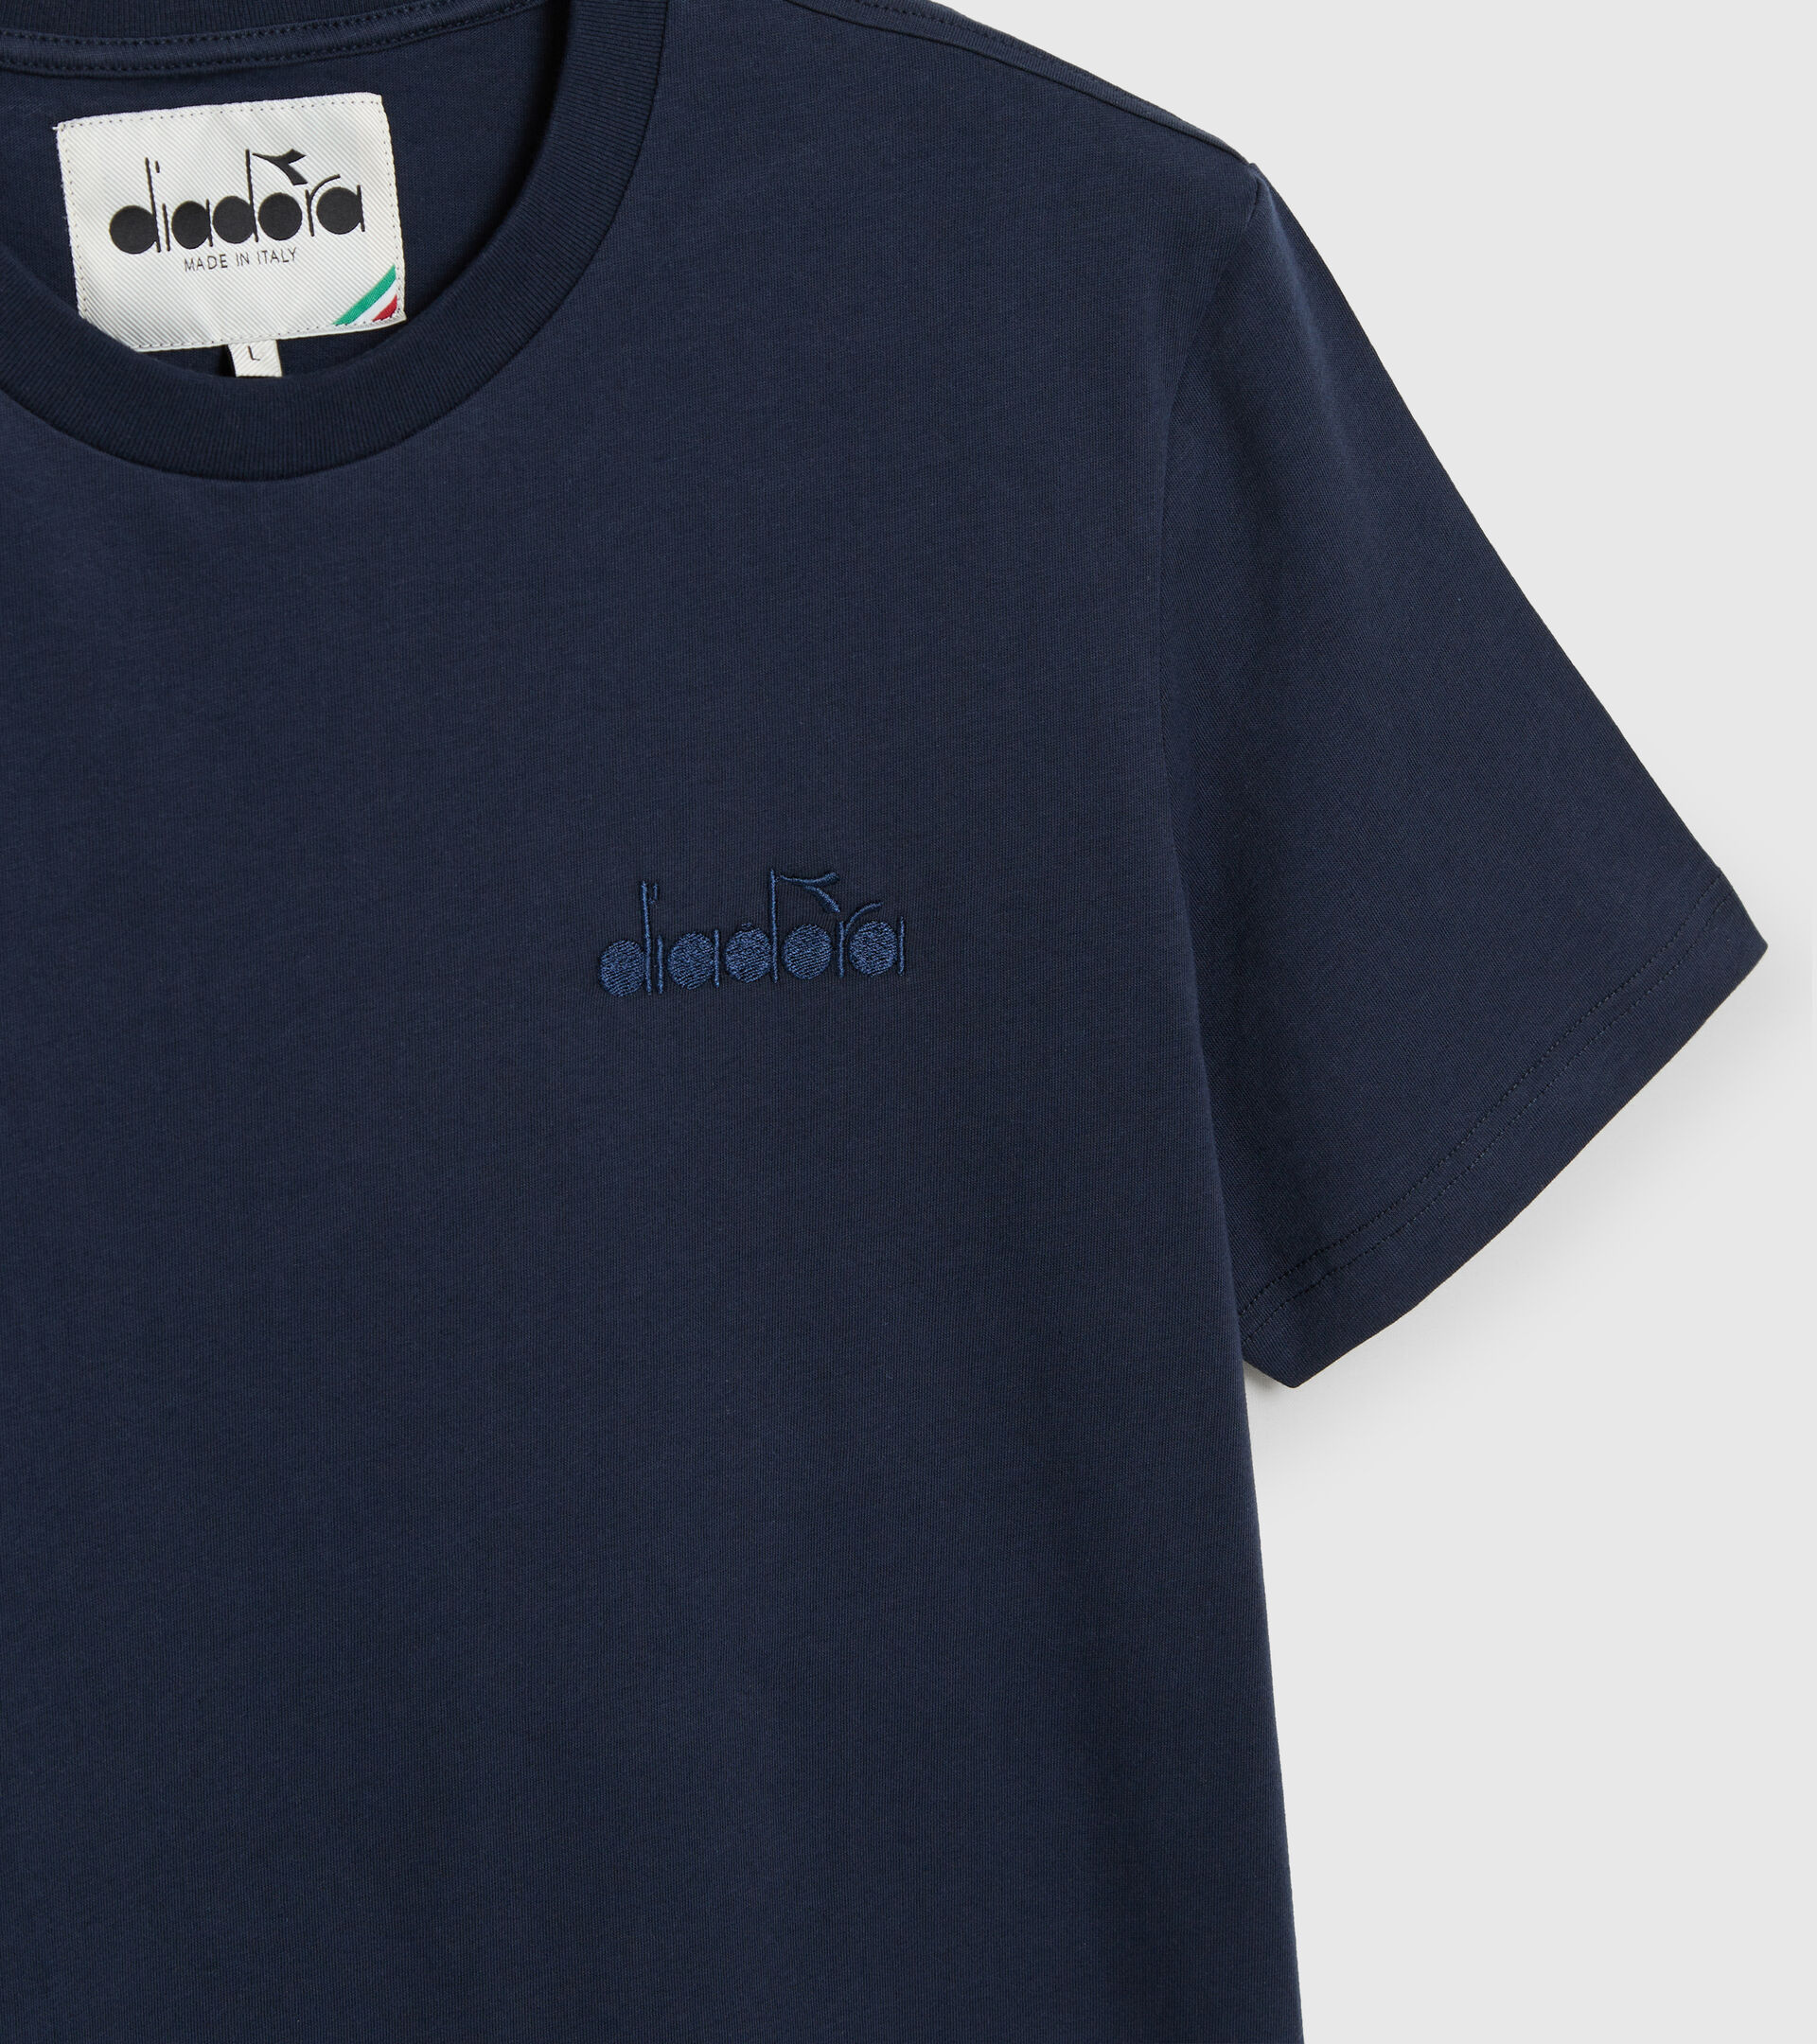 Camiseta de algodón - Hombre T-SHIRT SS MII NEGRO IRIS - Diadora